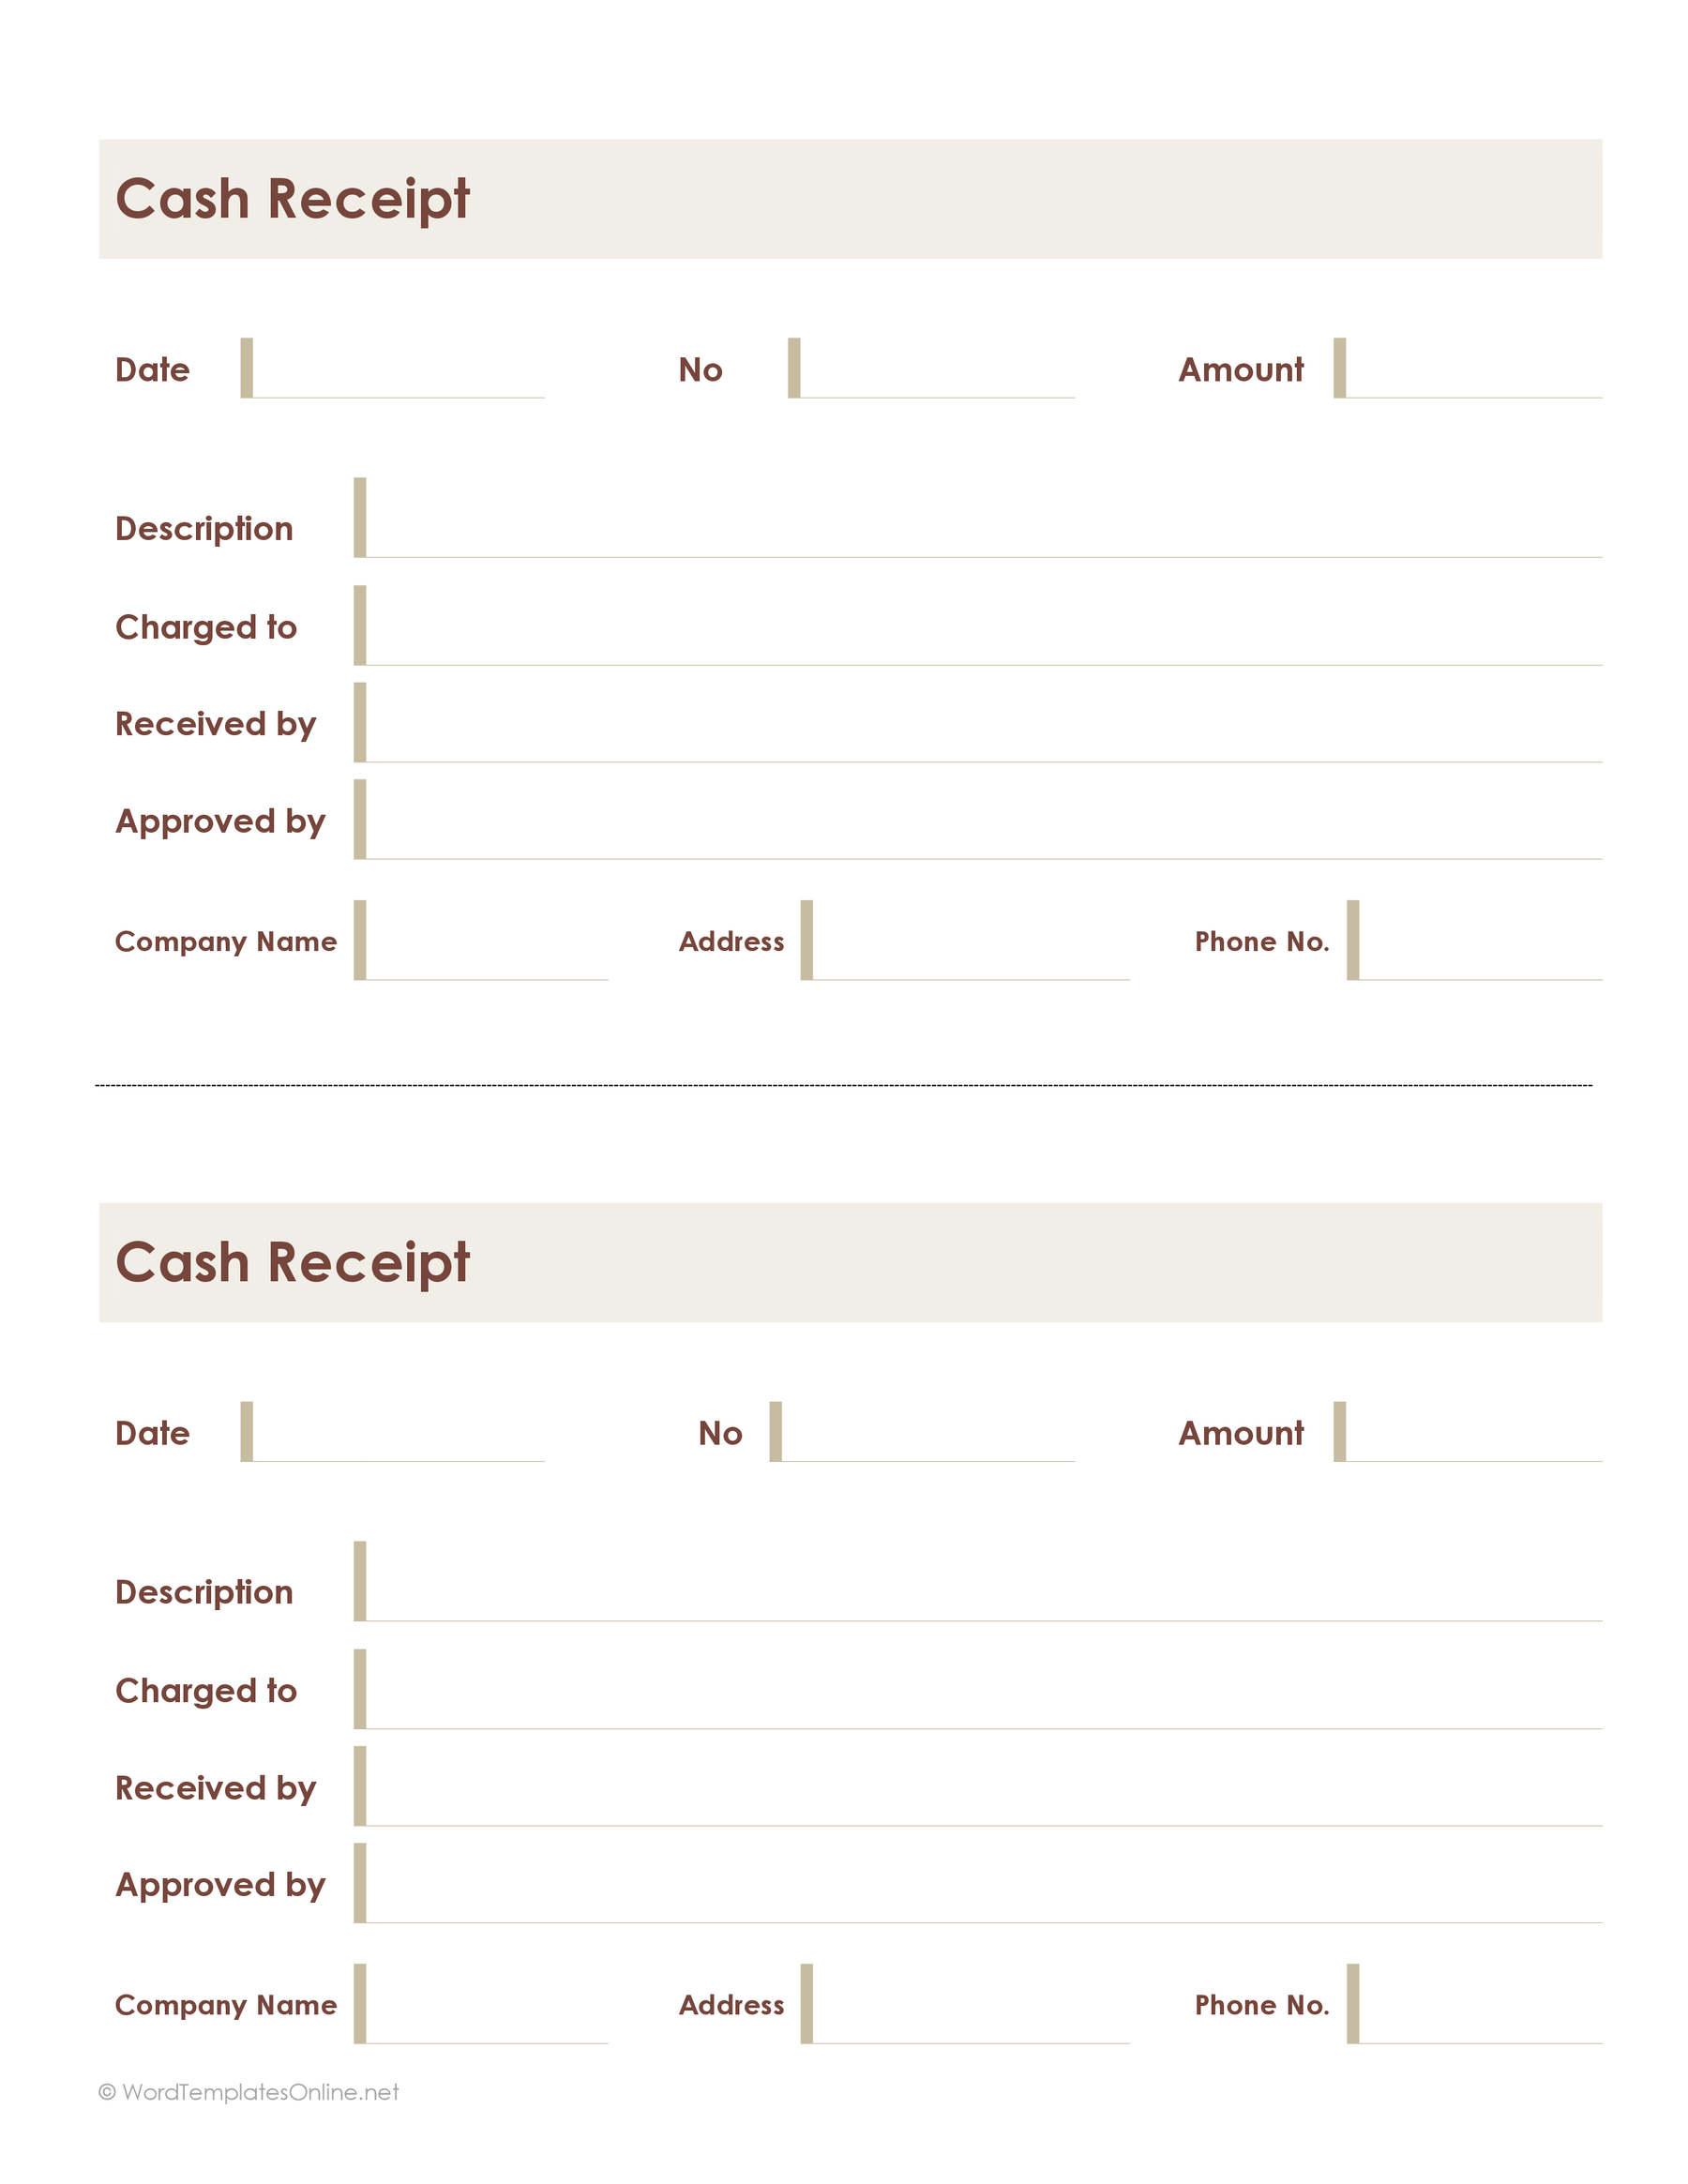 Blank cash receipt template - PDF